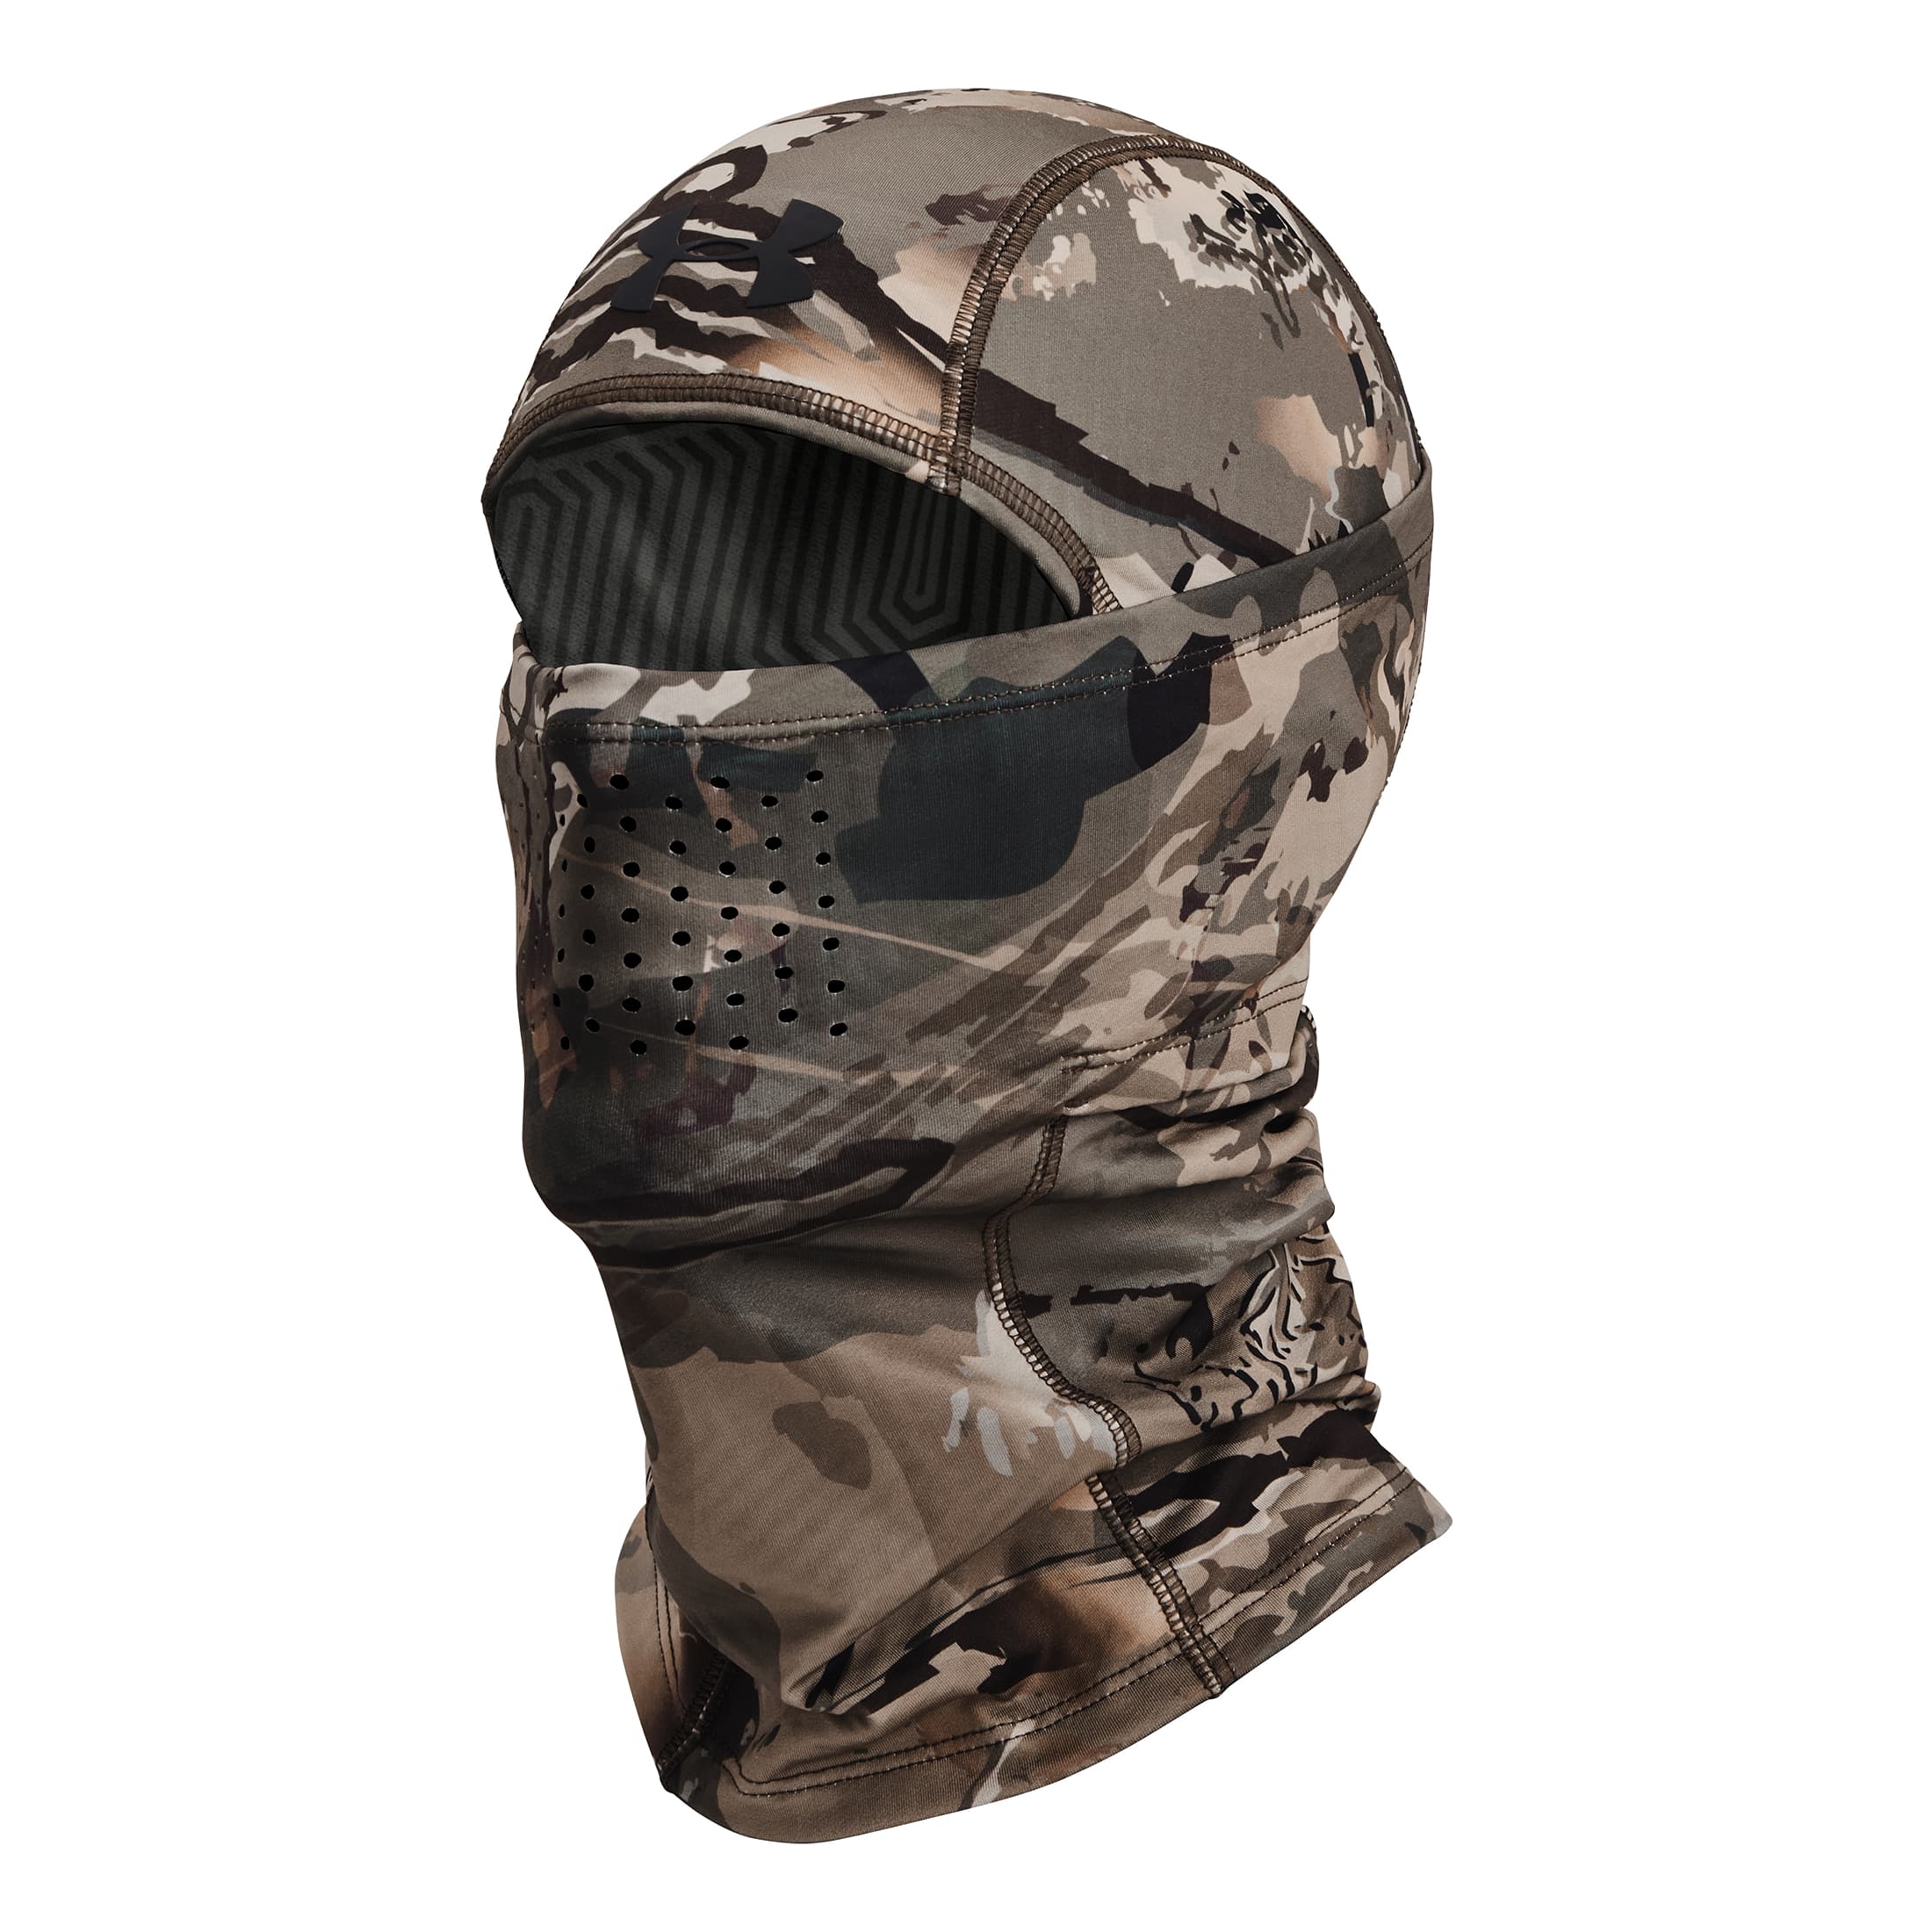 Under Armour Men's ColdGear Infrared Tactical Hood